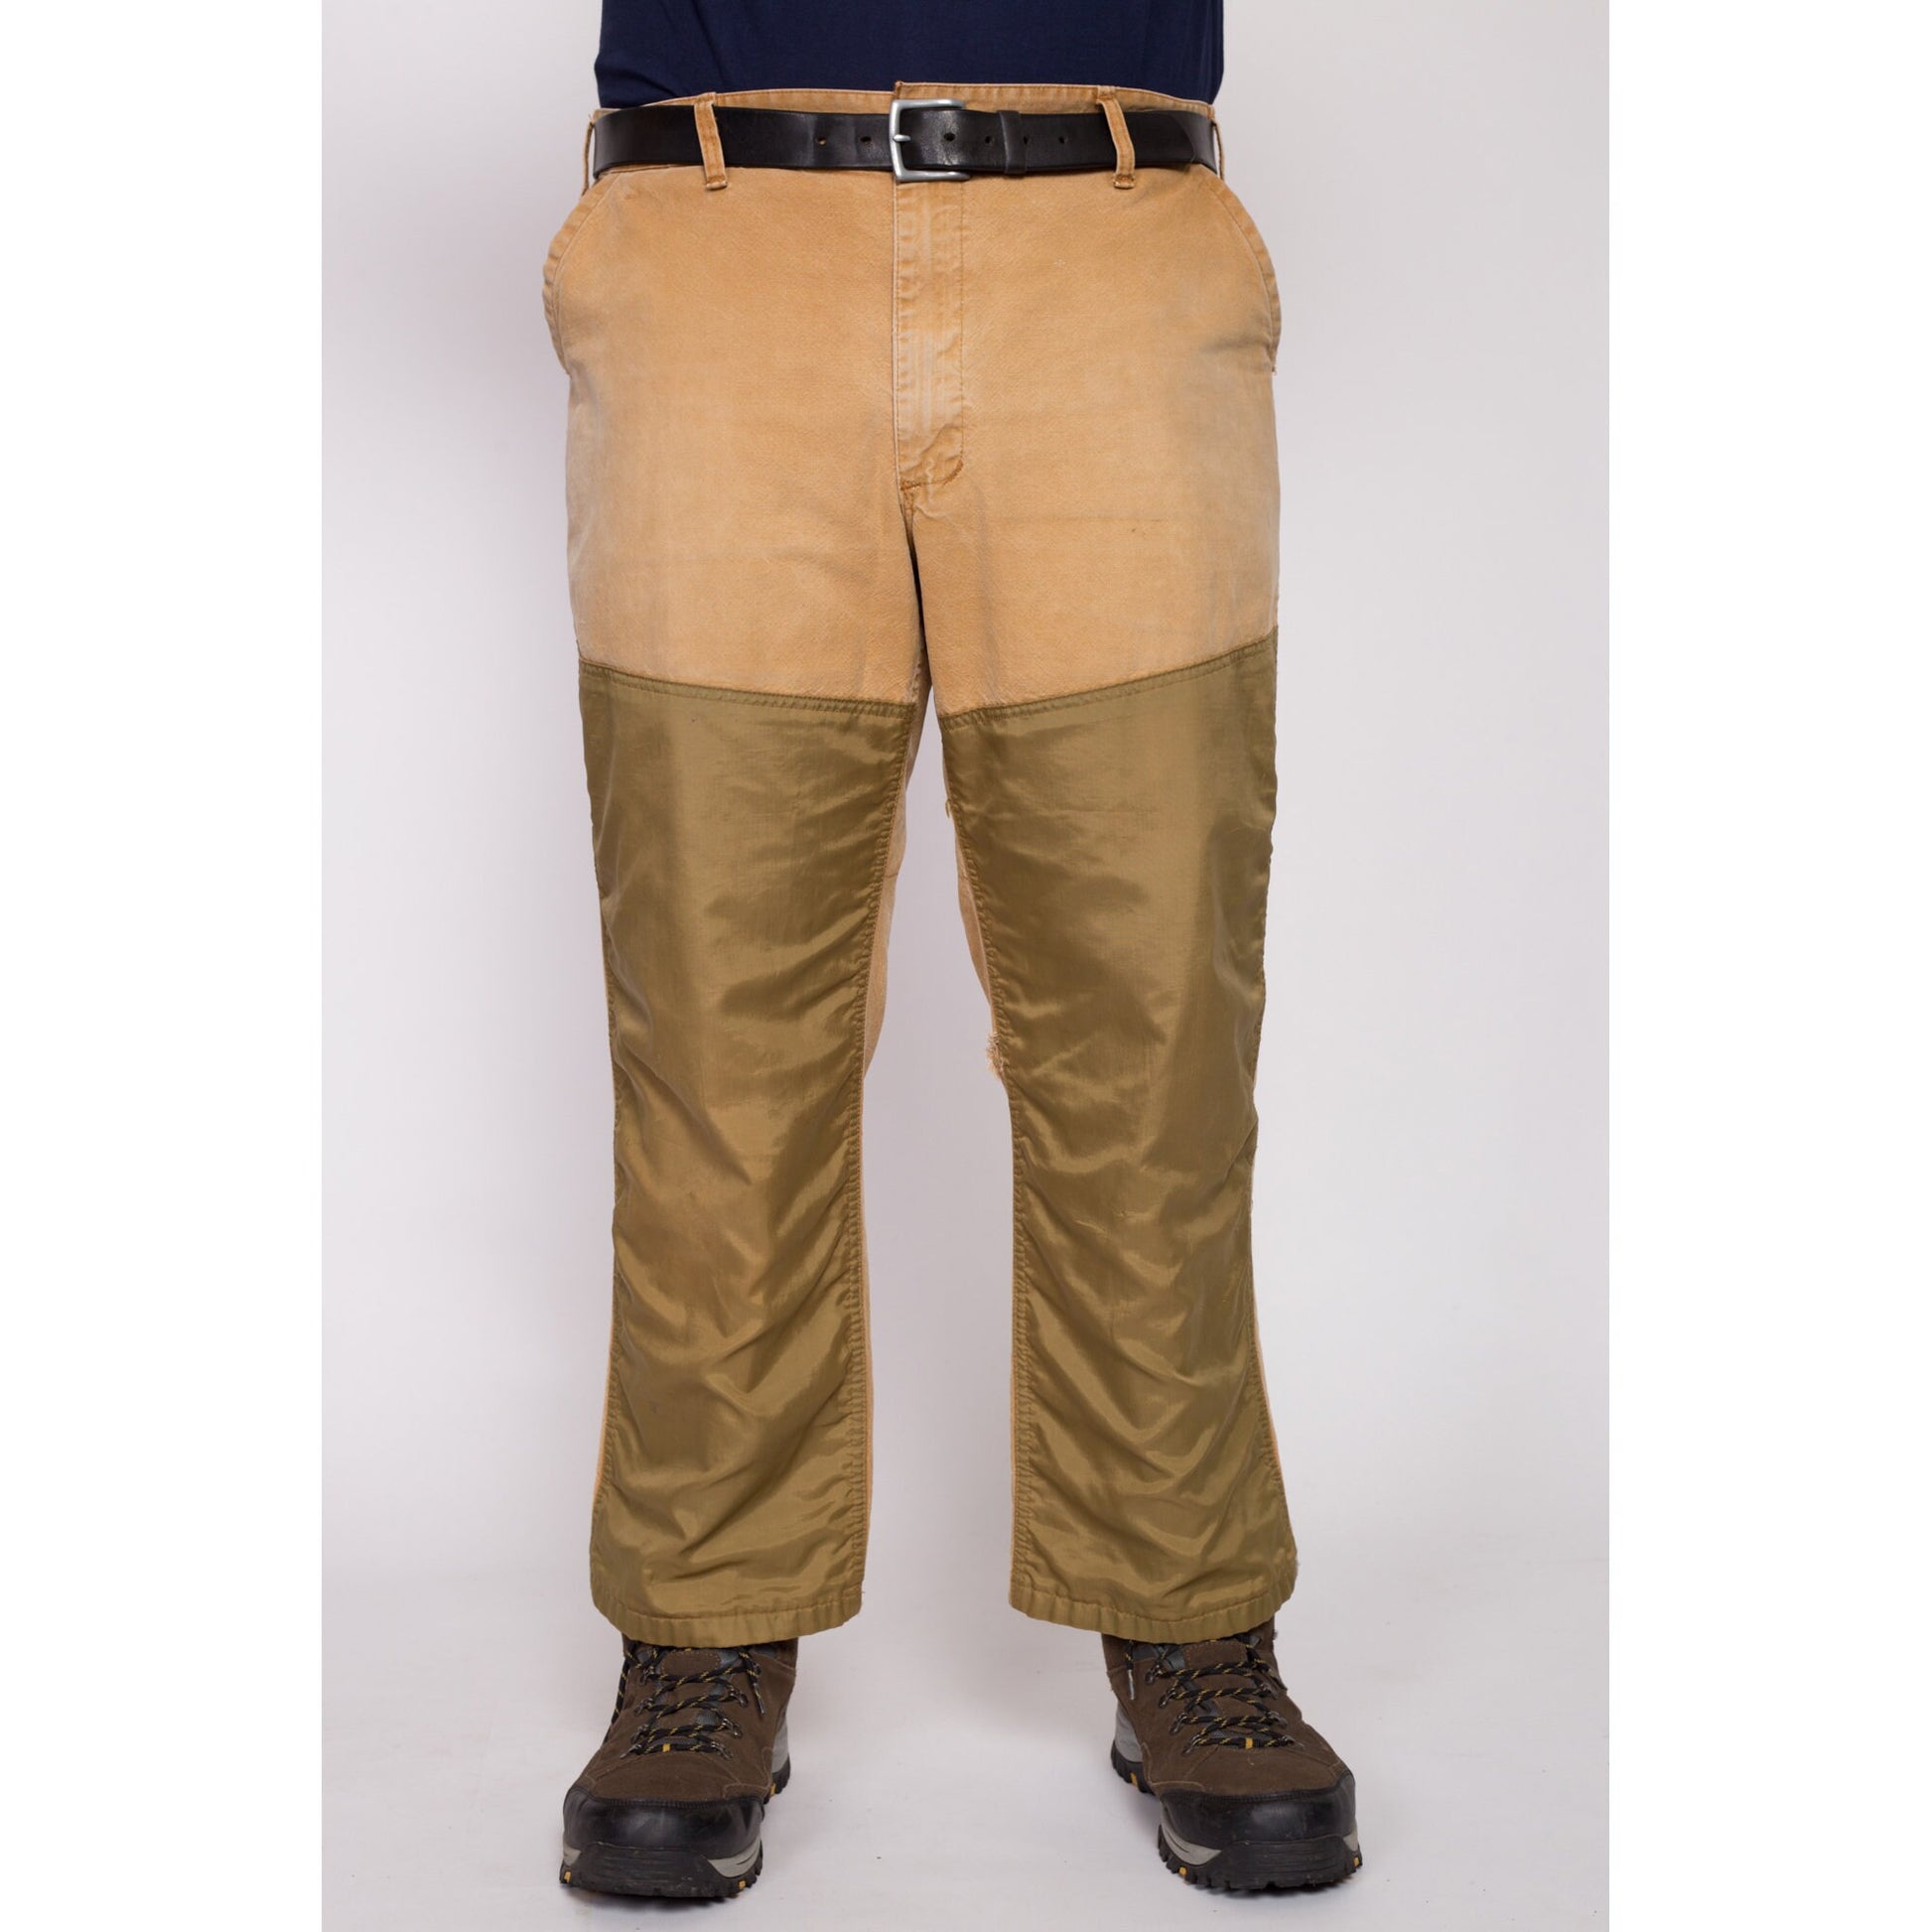 Vintage Duck Canvas Upland Hunting Pants - 41x28 | Waterproof Panel Tan Brown Workwear Outdoors Pants